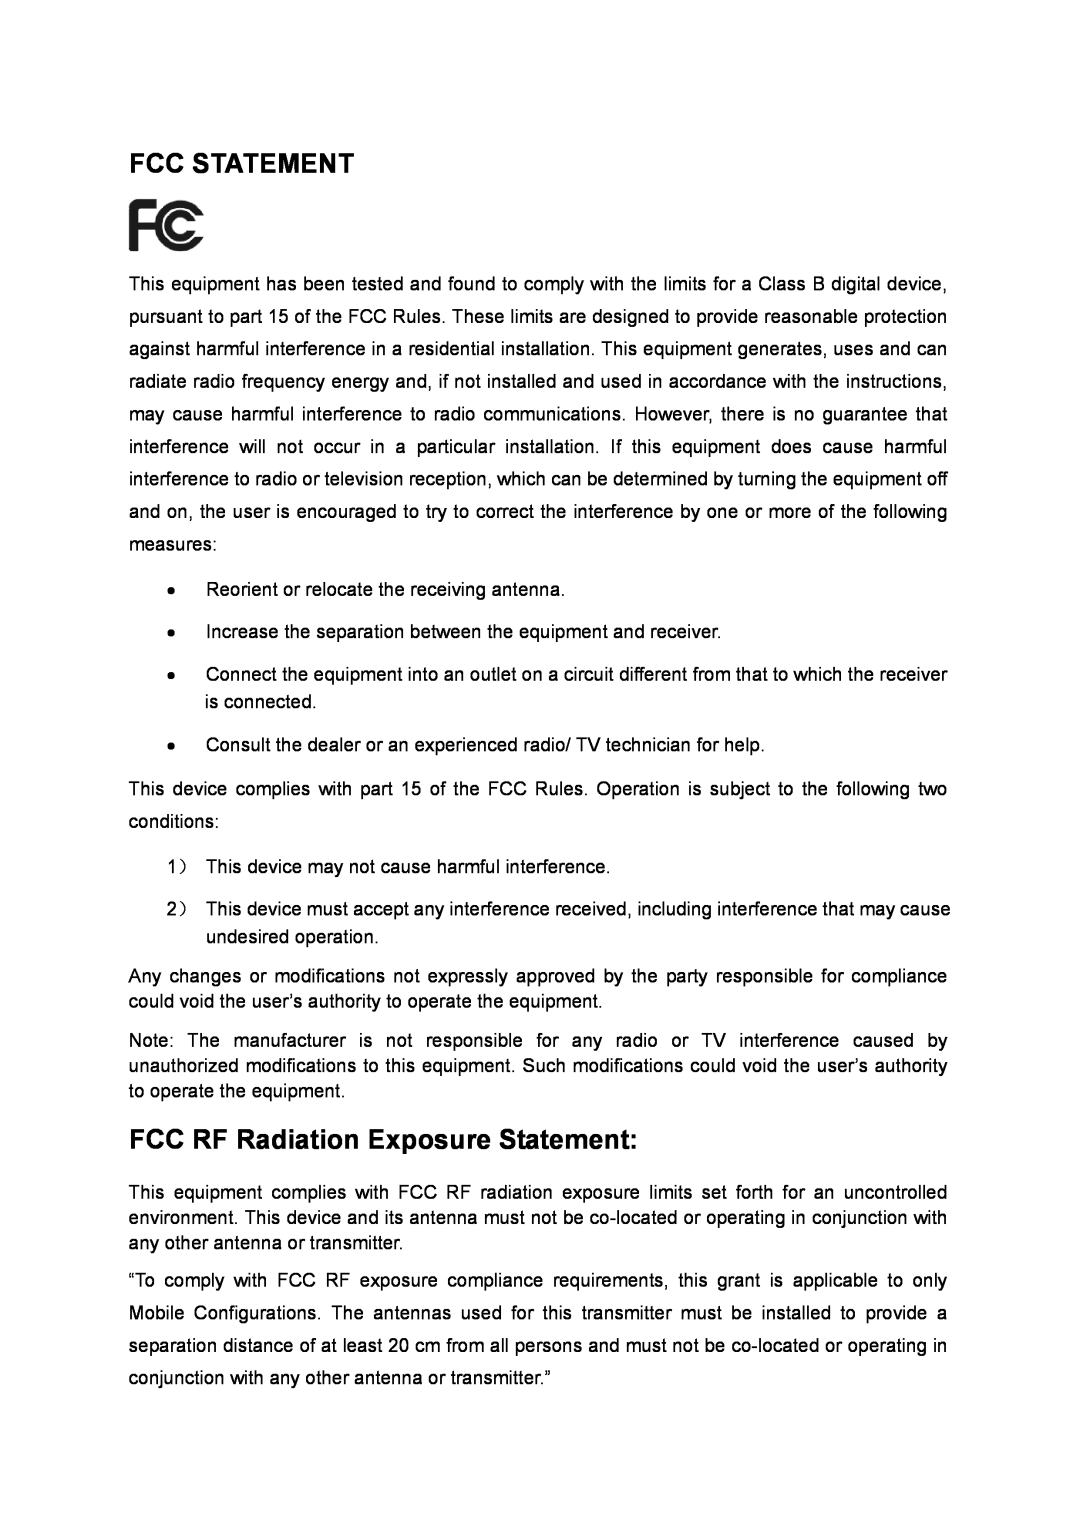 TP-Link TL-WDR3500 manual Fcc Statement, FCC RF Radiation Exposure Statement 